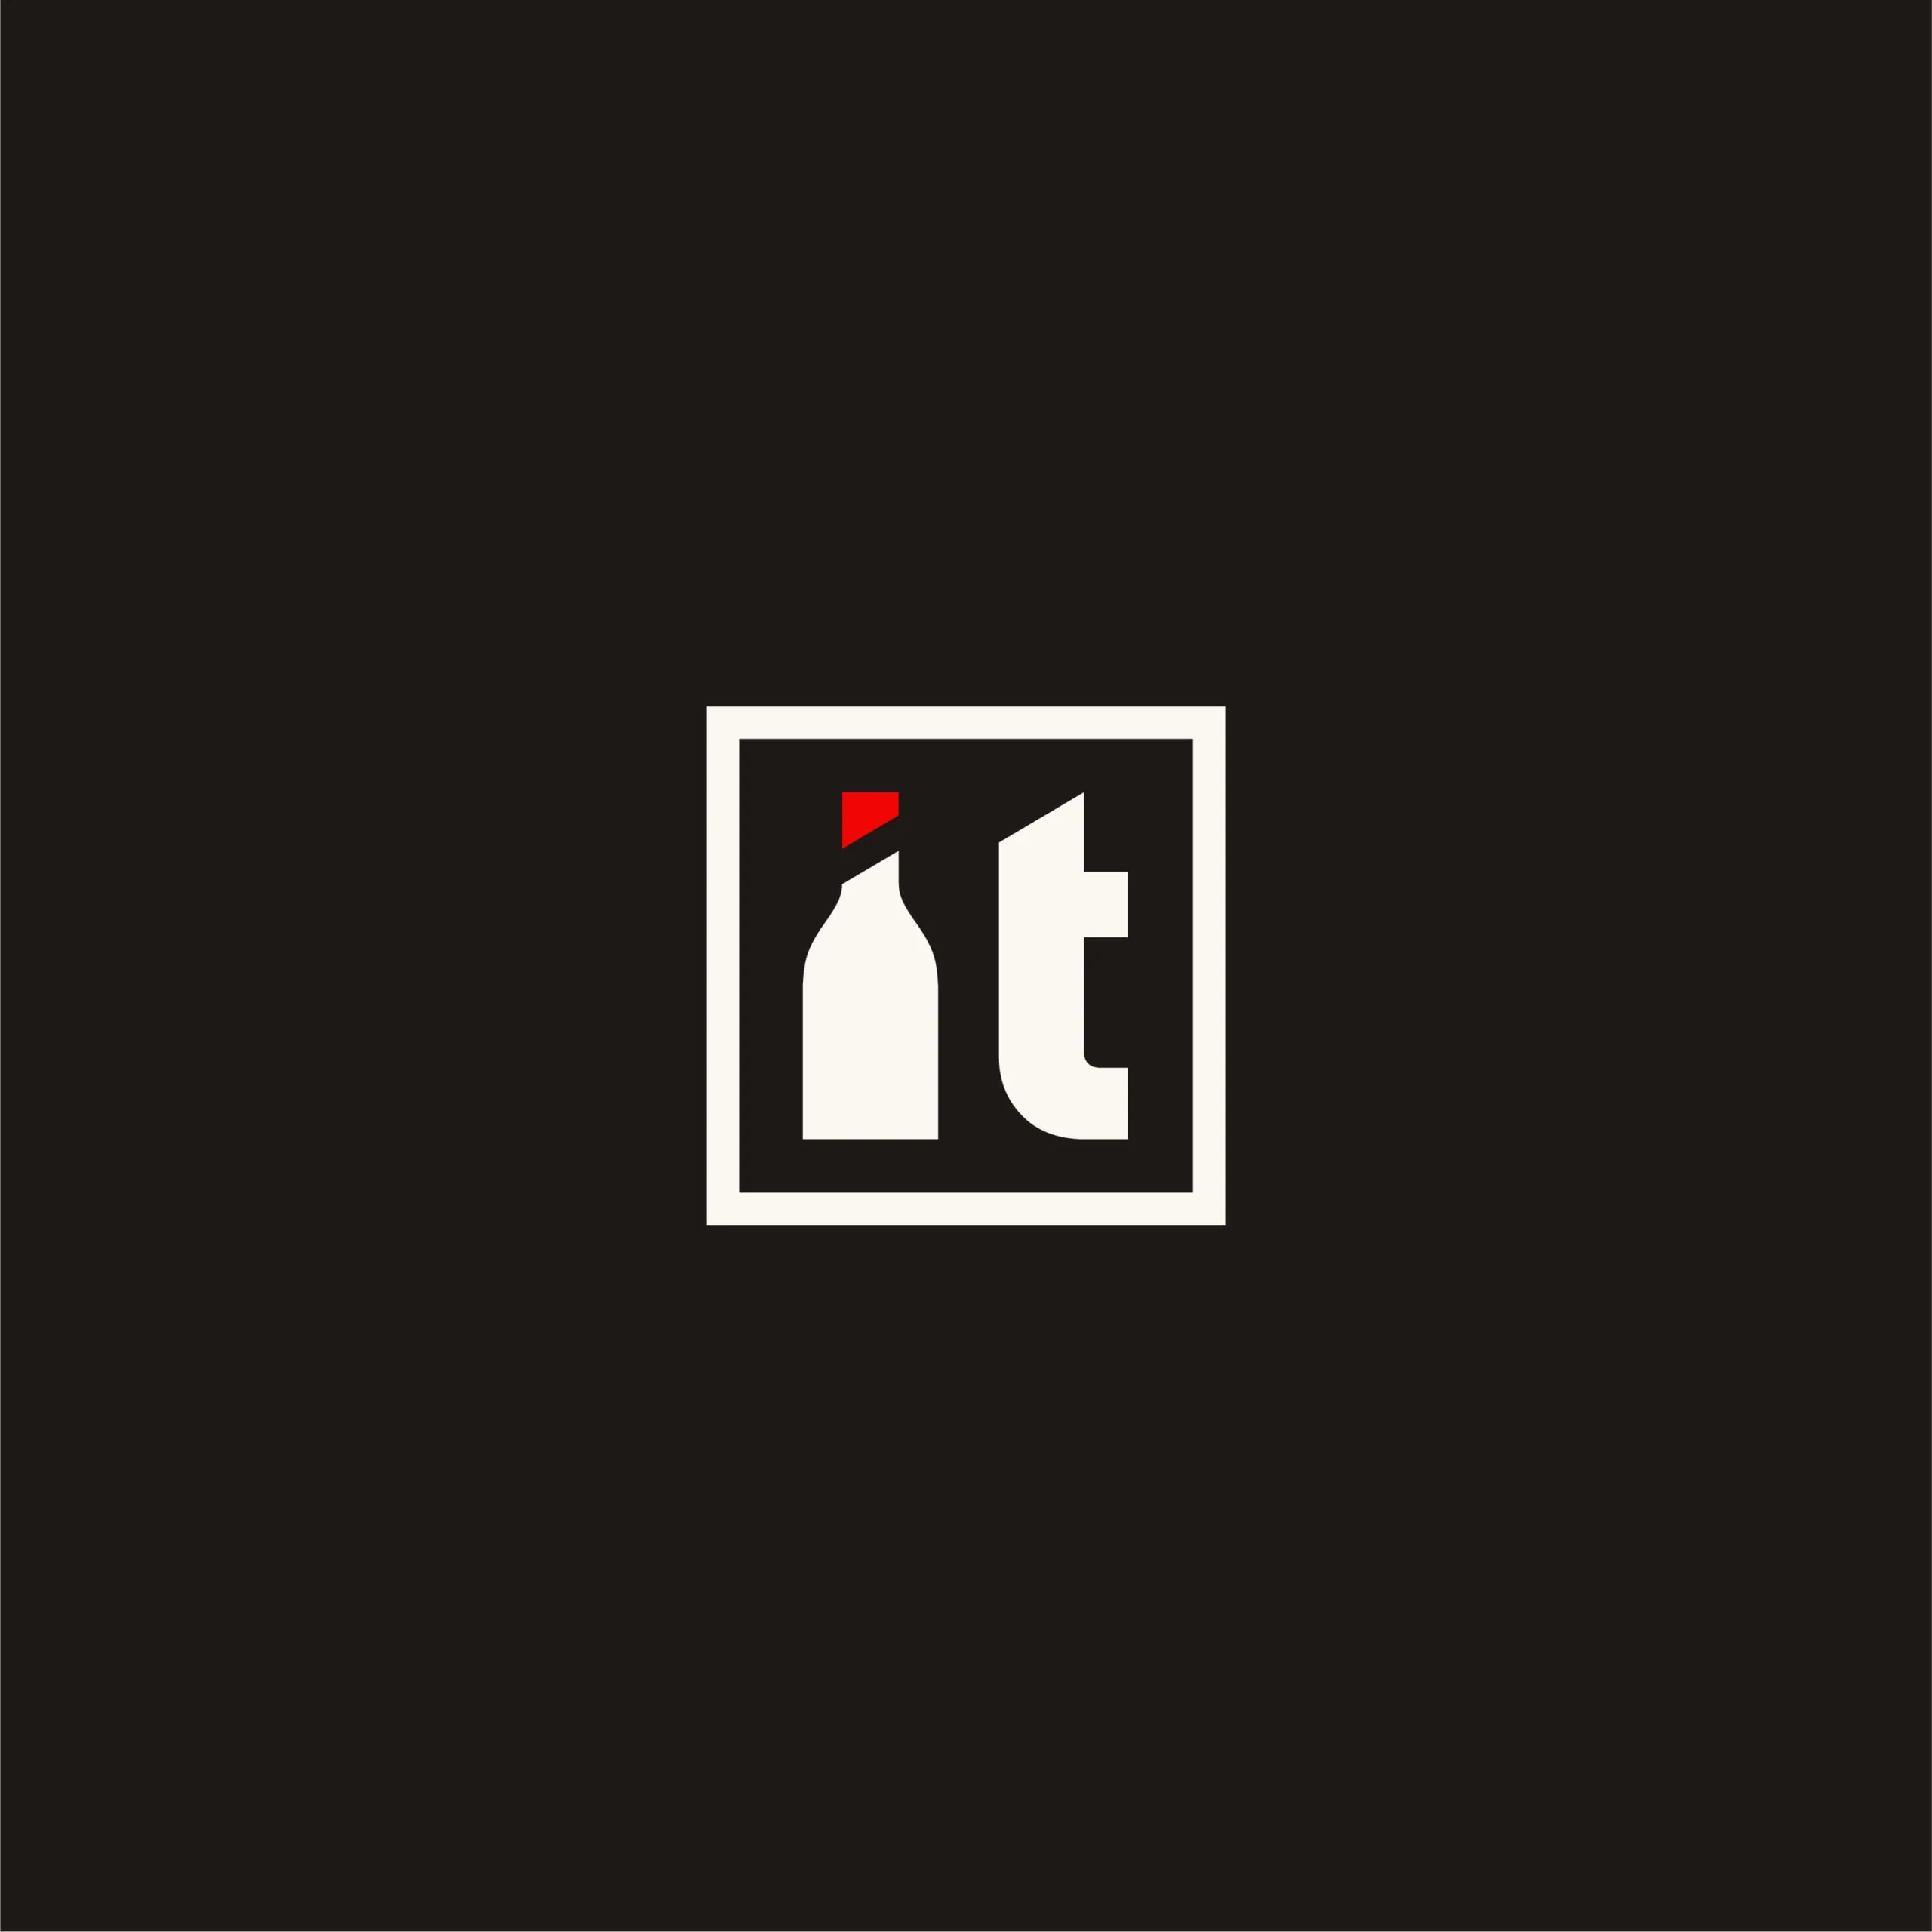 italializeme logo icon white black square@3x scaled - Bärenstark - Advertising Agency from Karlsruhe Mühlburg